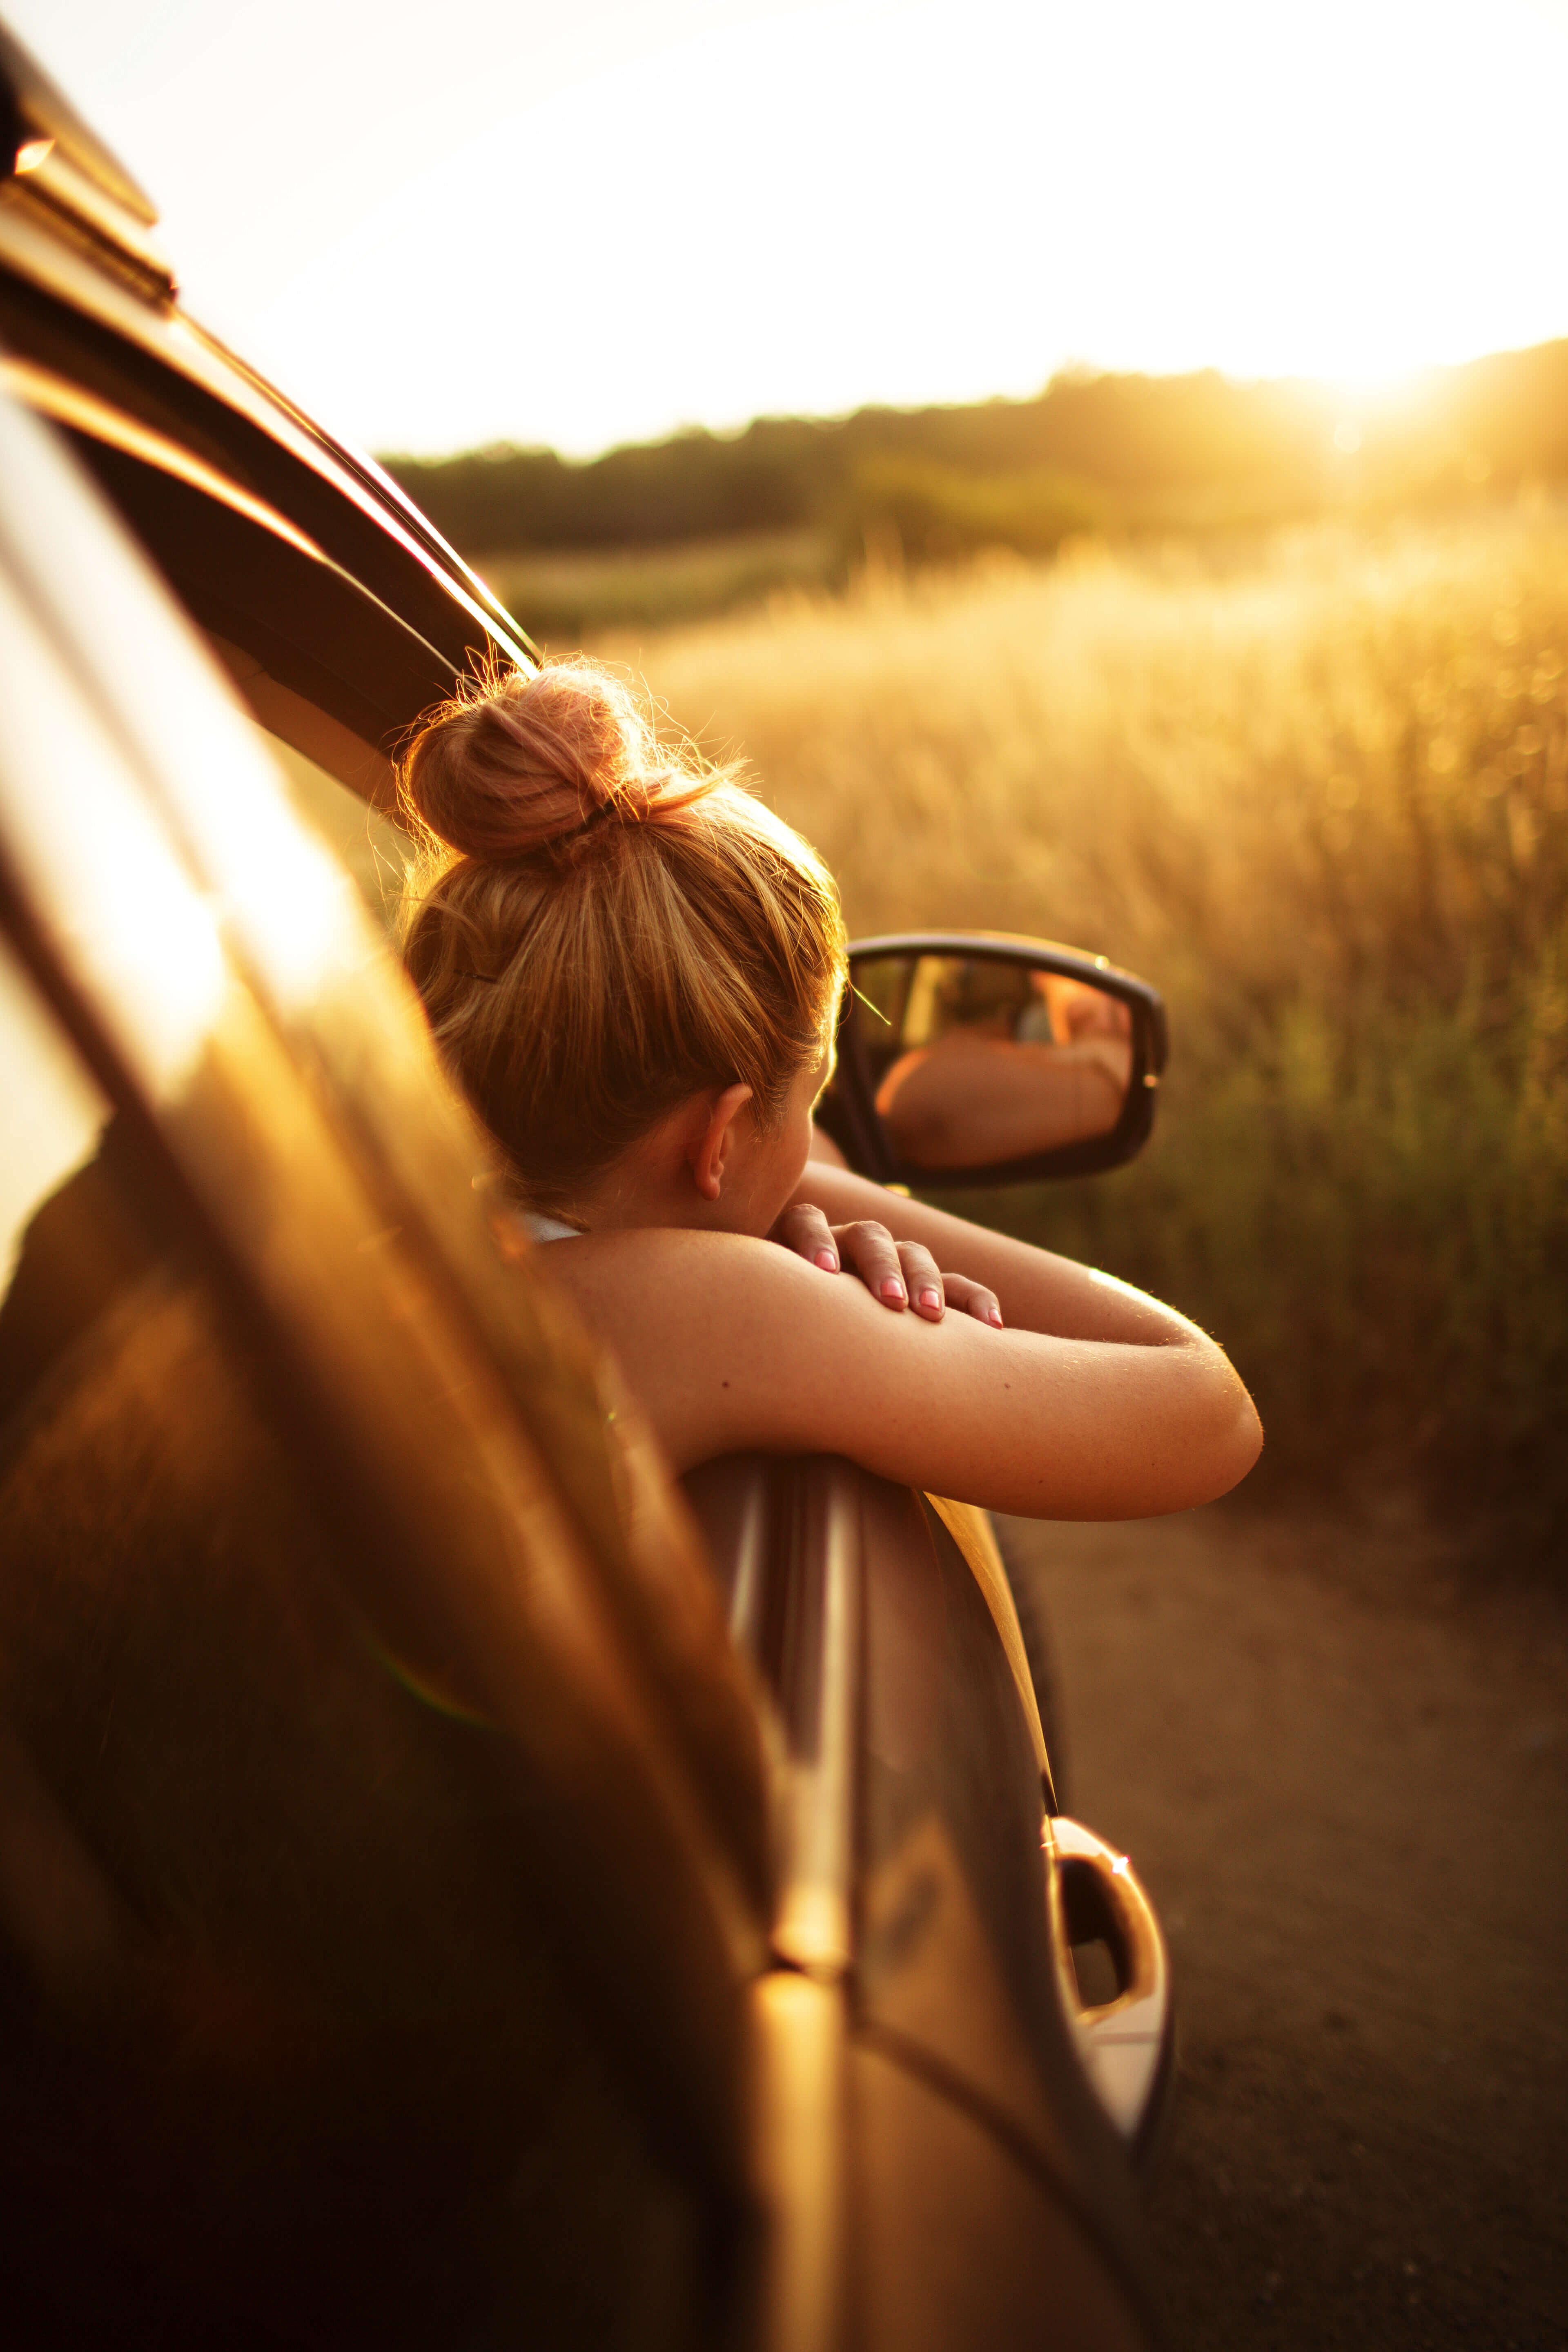 Woman enjoying car ride and sunset